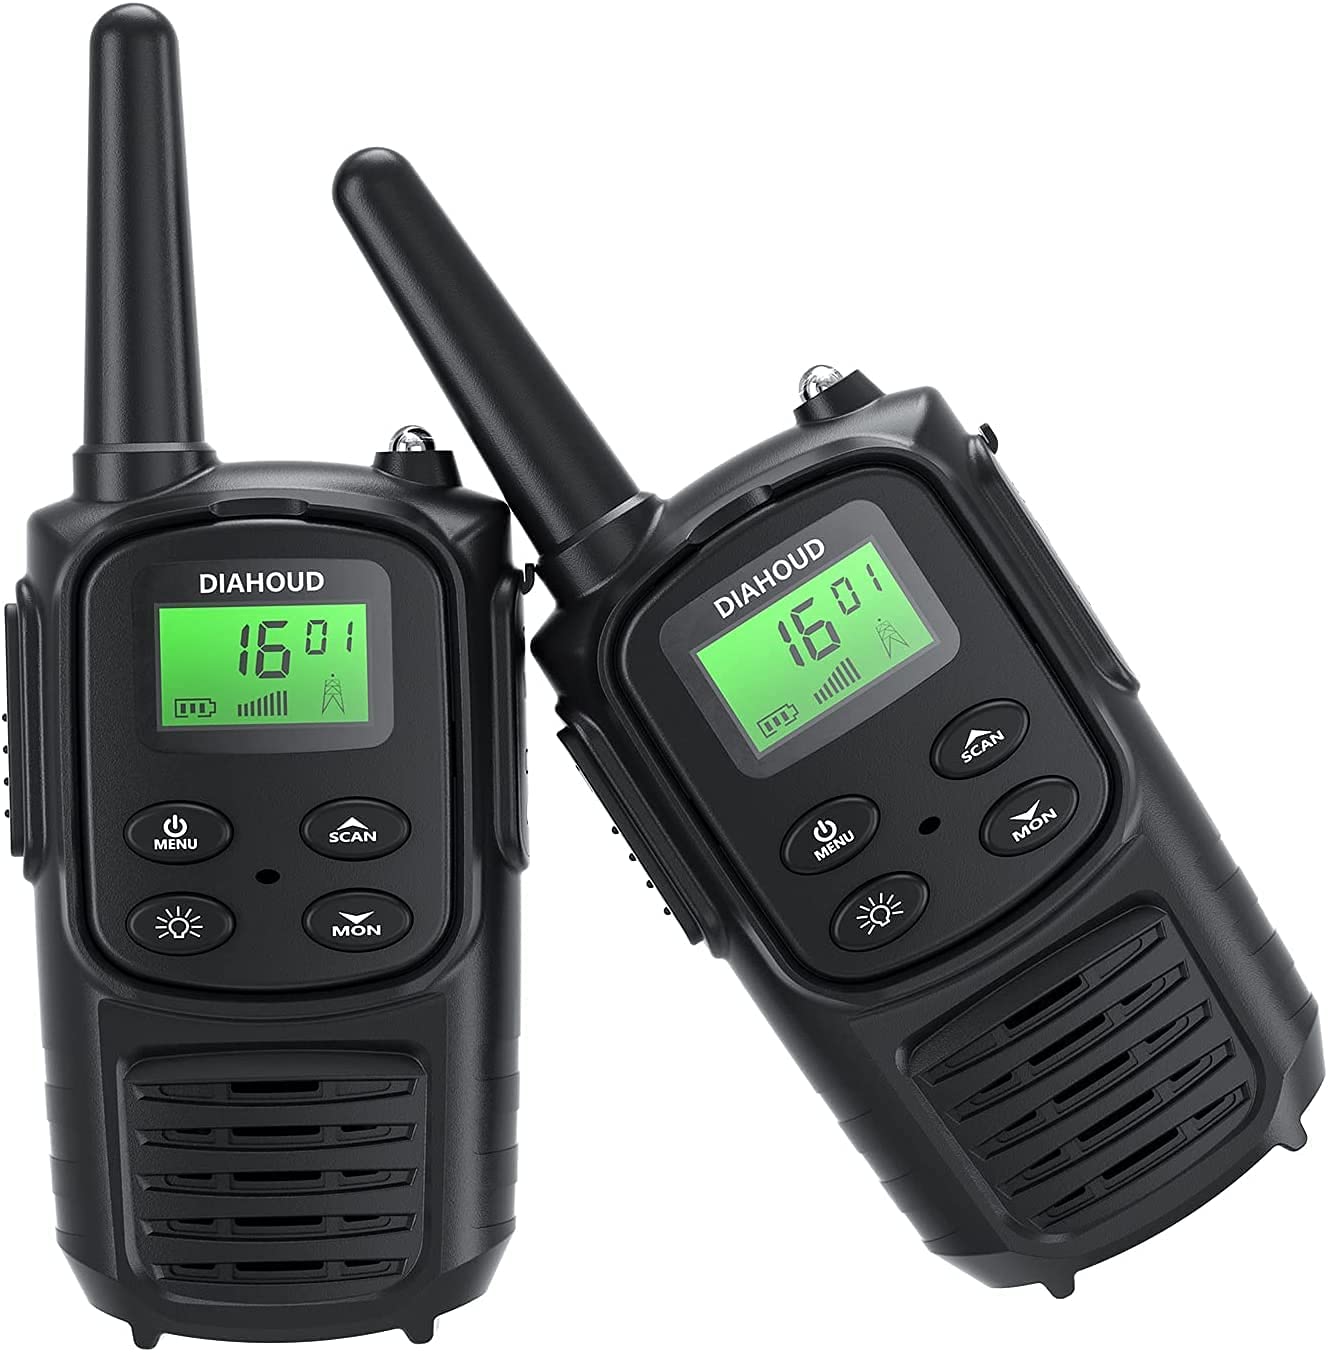 PMR 446 radios